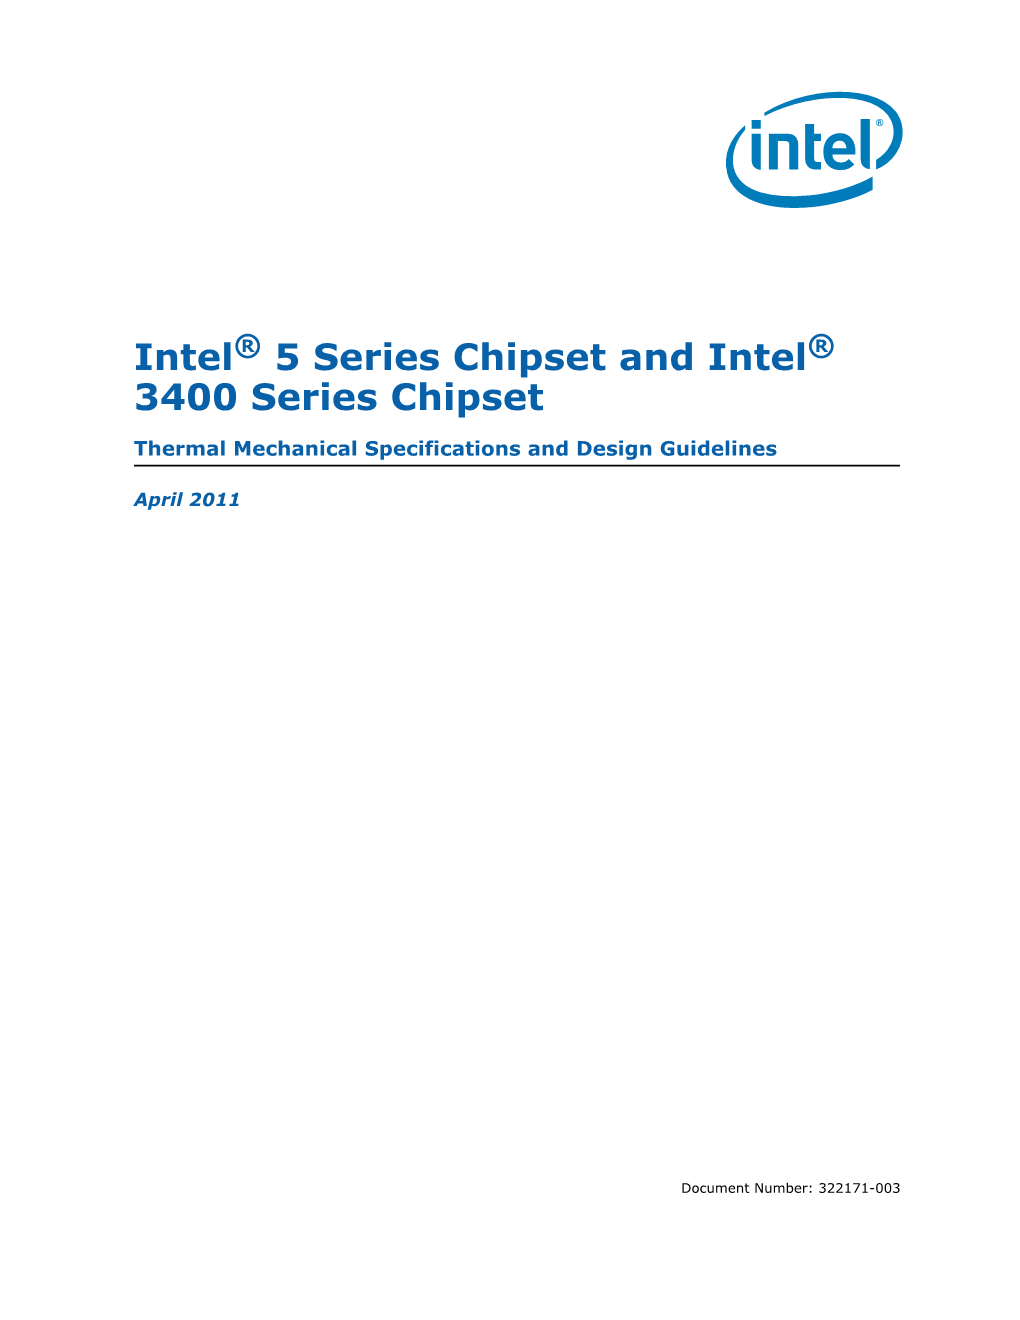 Intel® 5 Series Express Chipsetintel® A57 Chipsetintel® 3400 Series